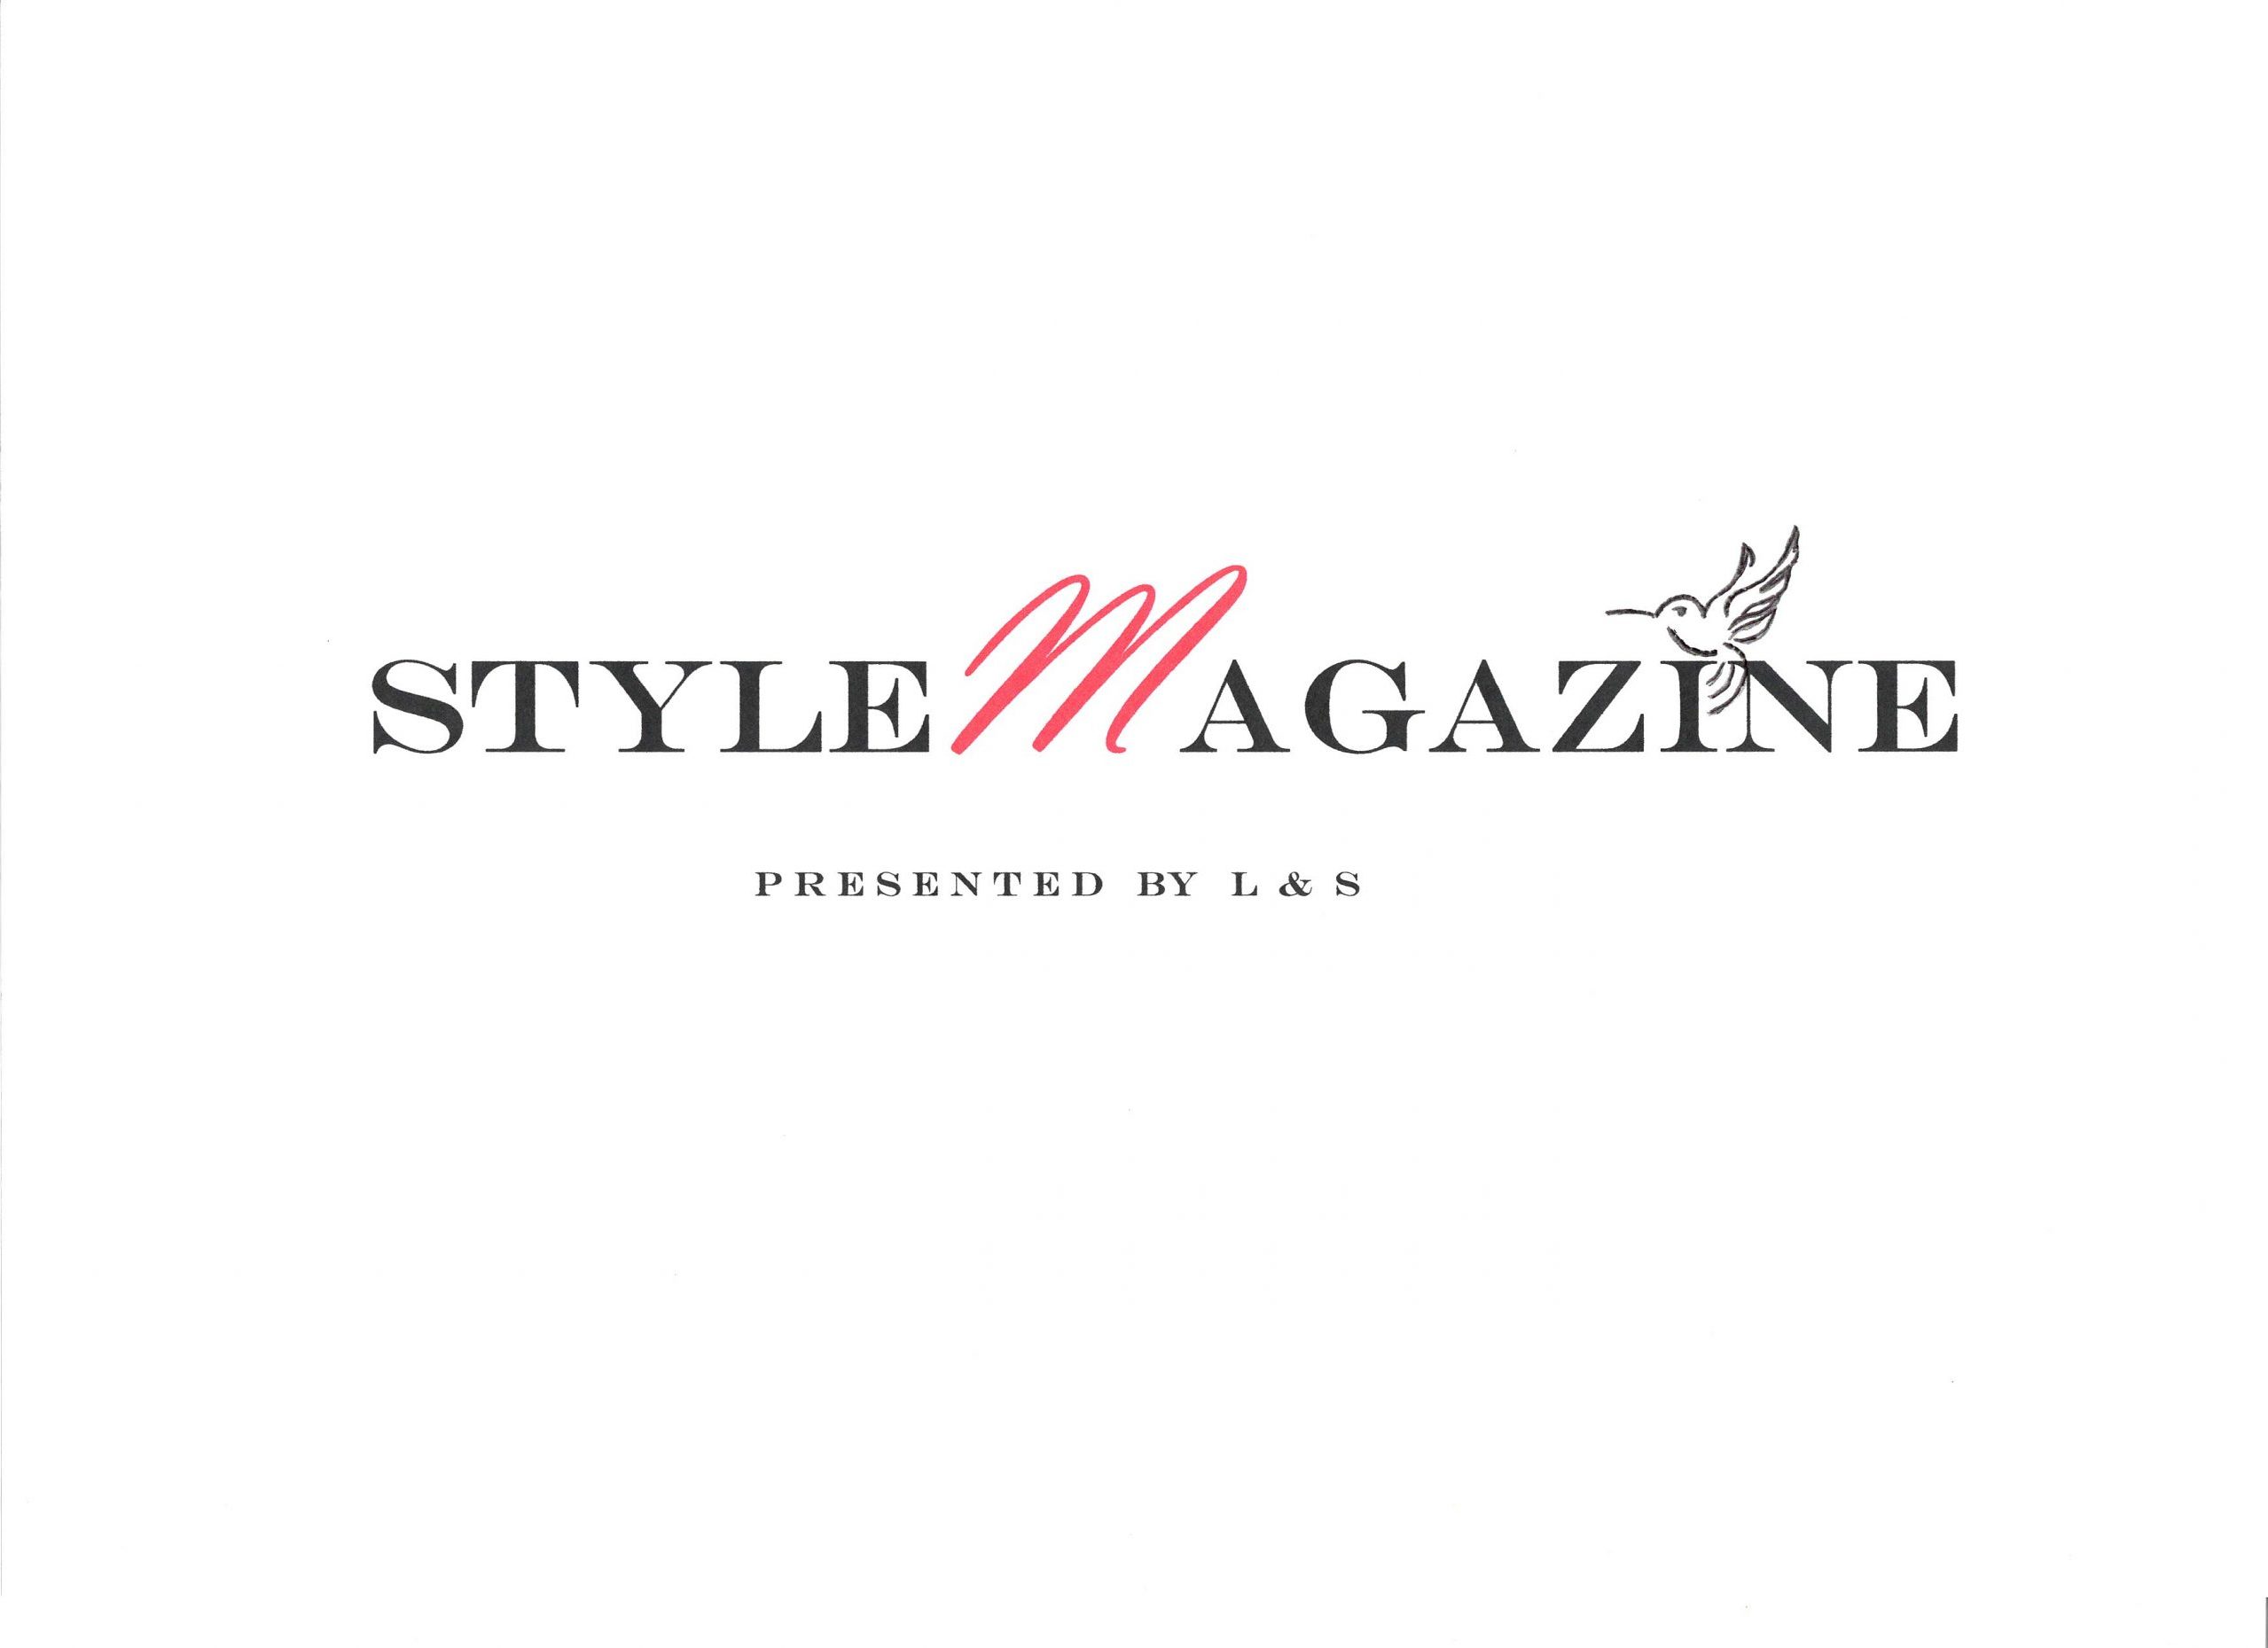 Stylemagazine